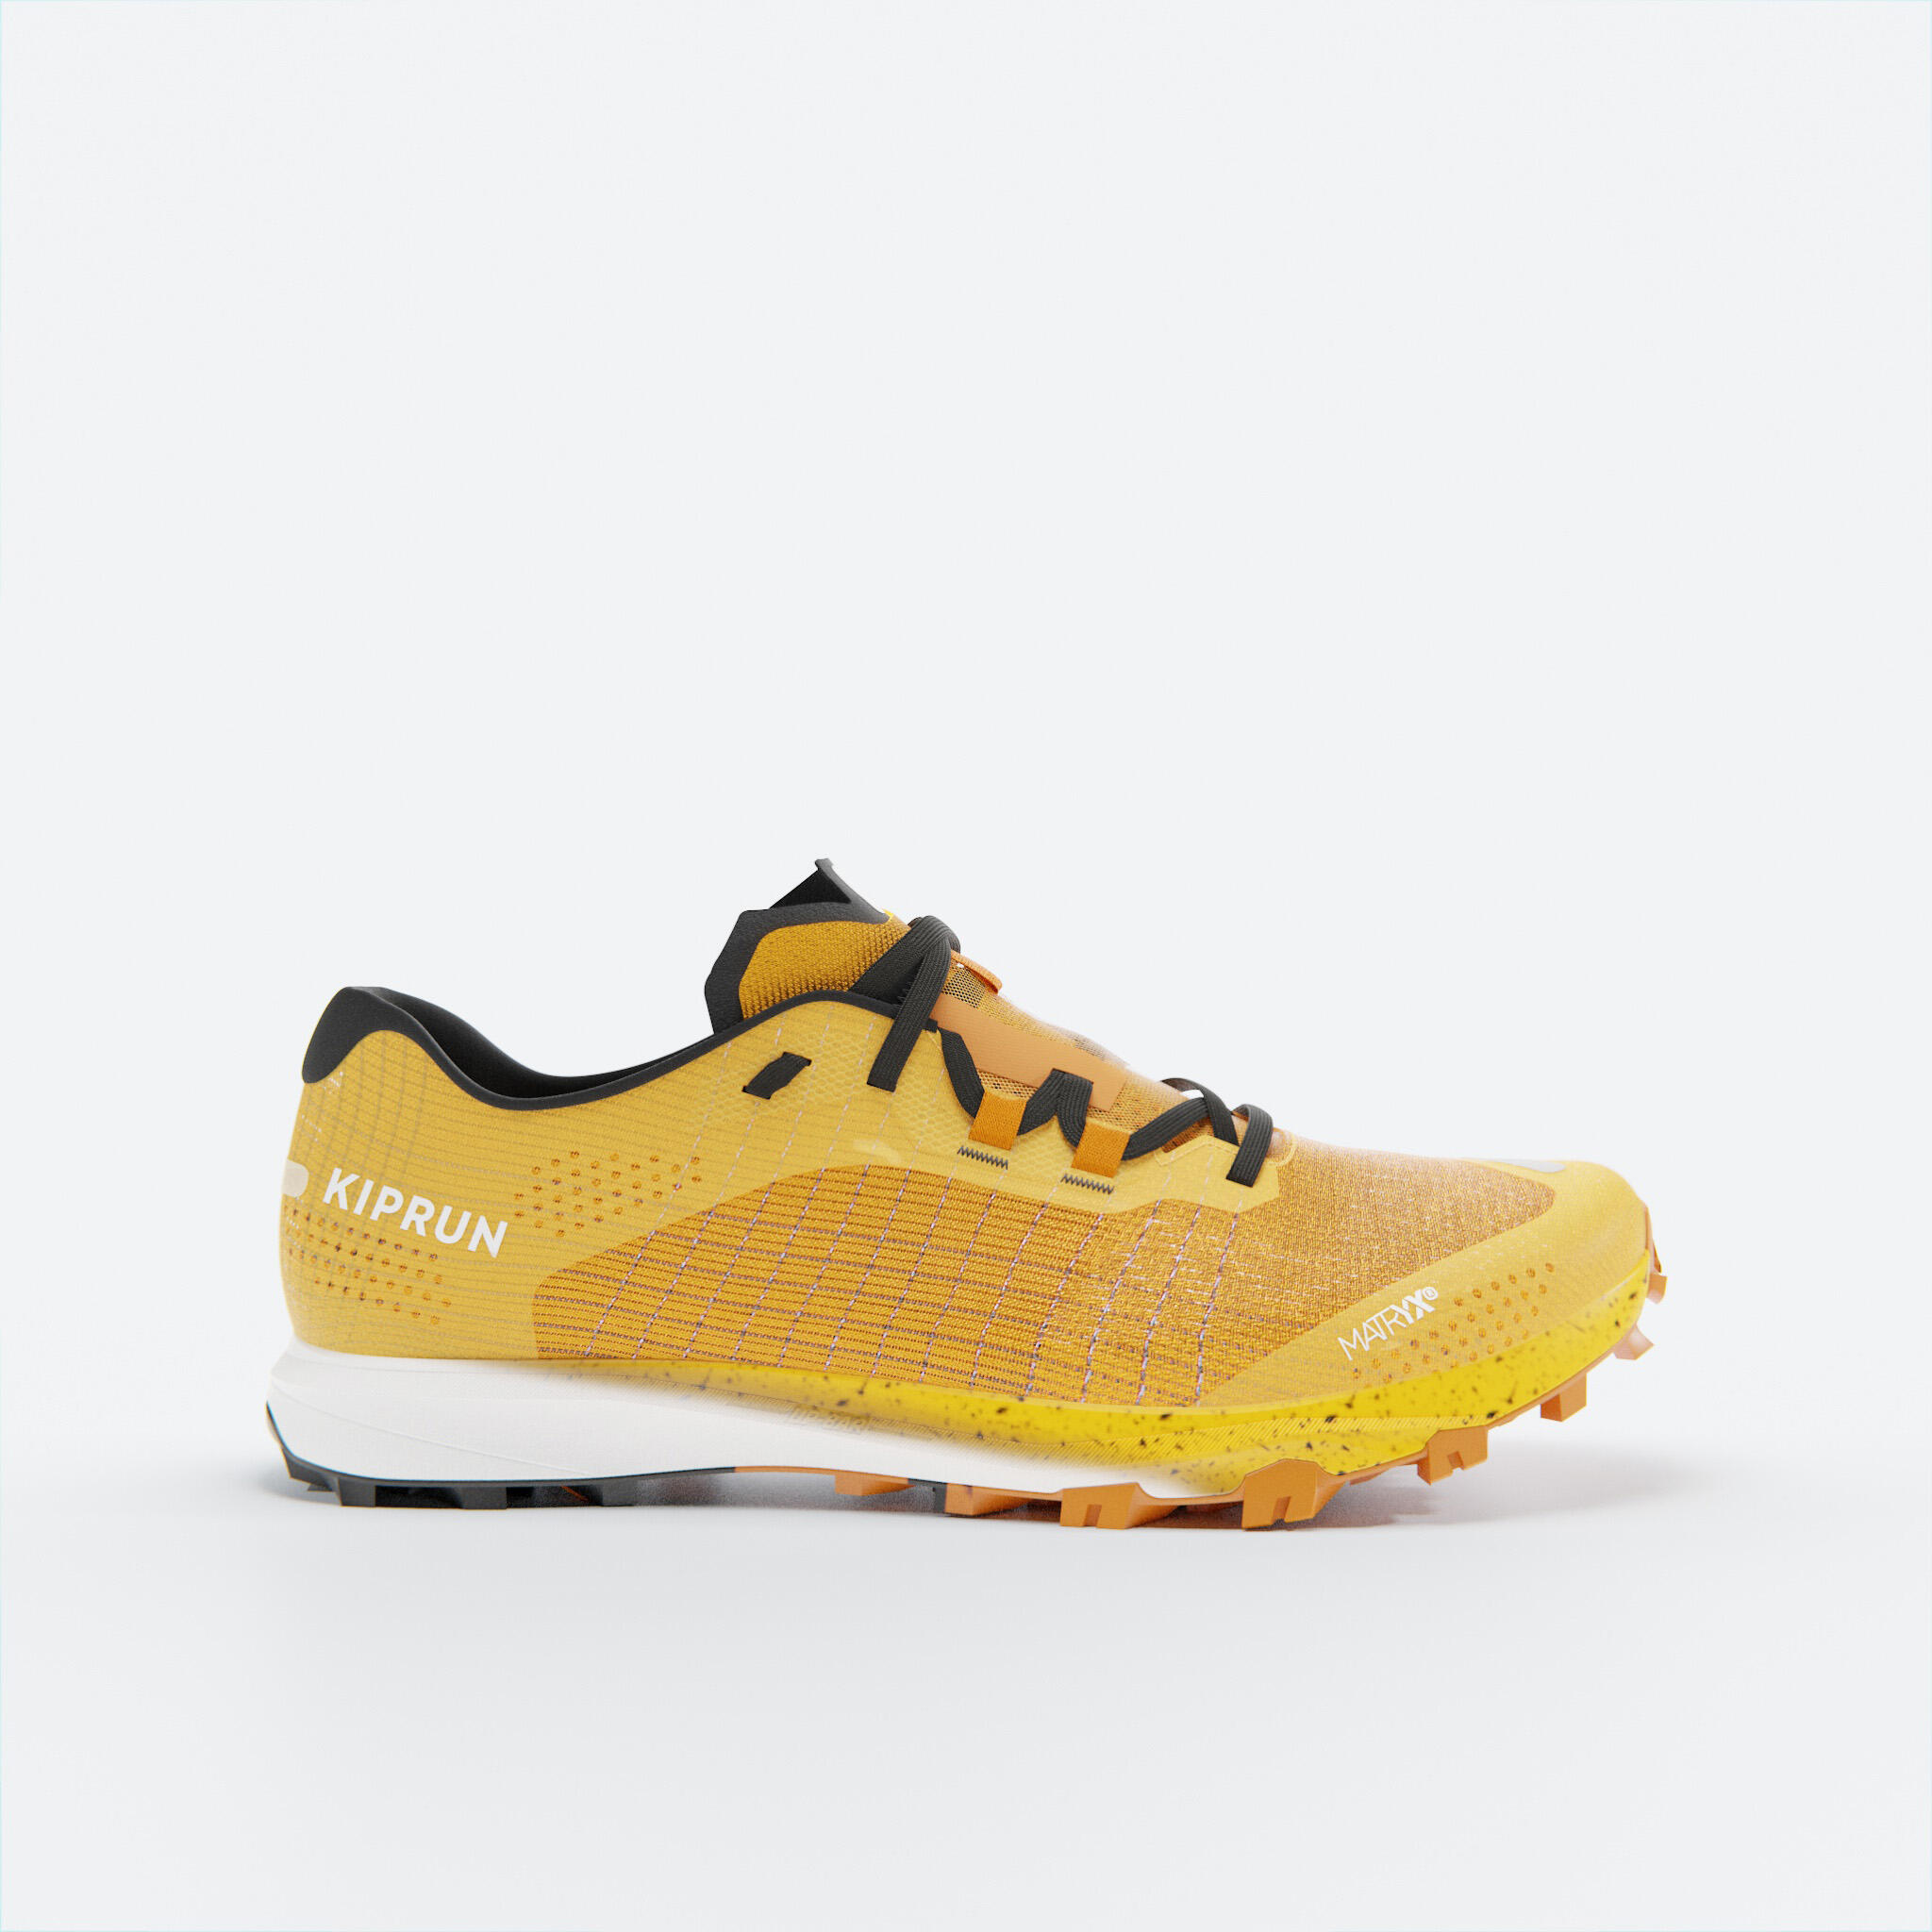 Kiprun Race Light Men's Trail Running Competition Shoes - Mango 5/11